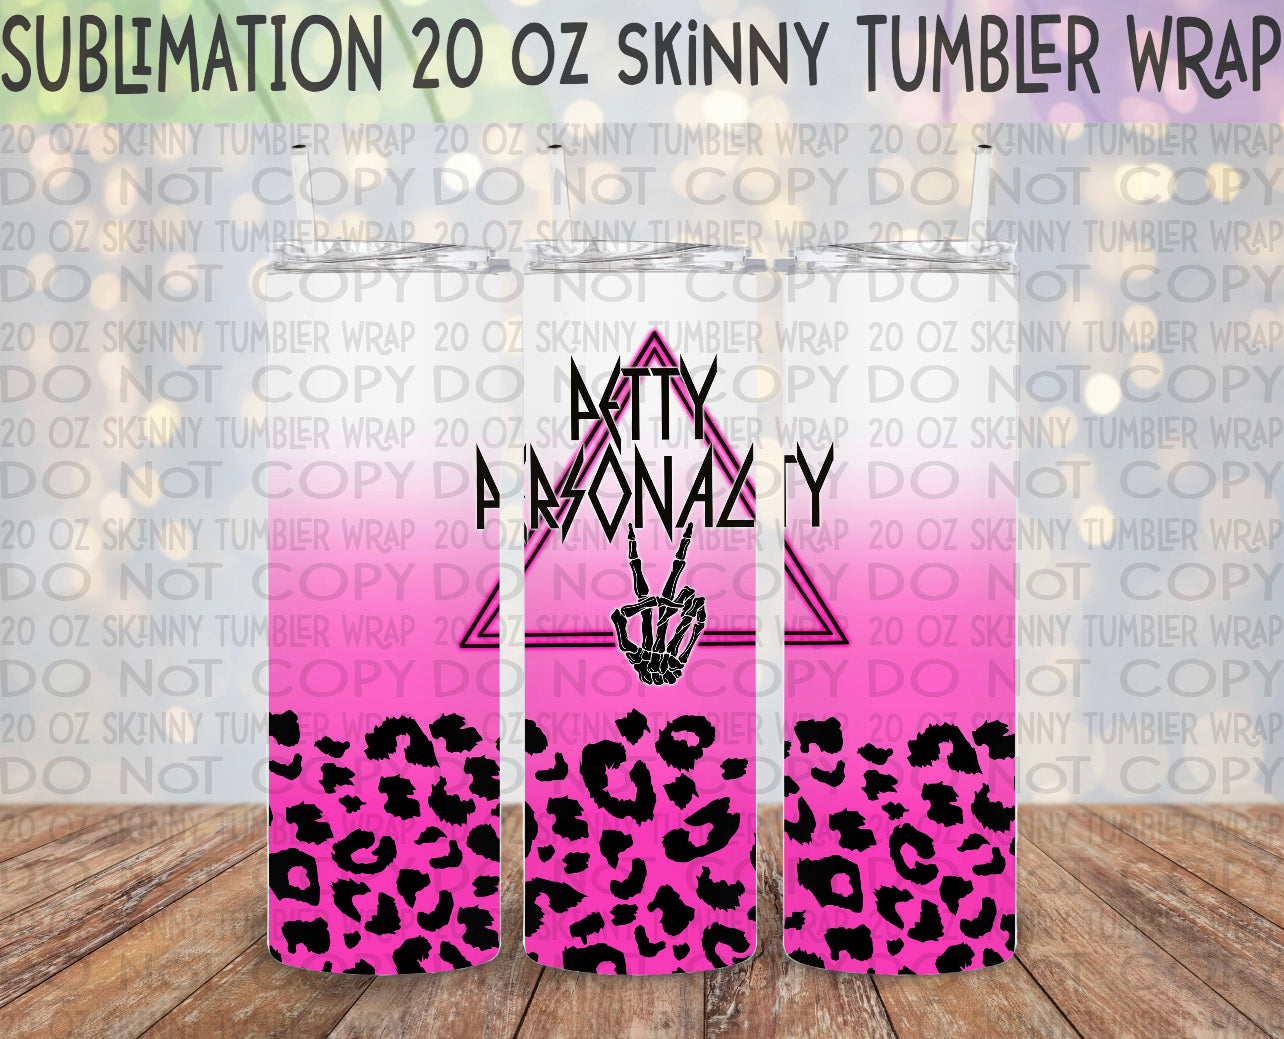 Petty Personality 20 Oz Skinny Tumbler Wrap - Sublimation Transfer - RTS